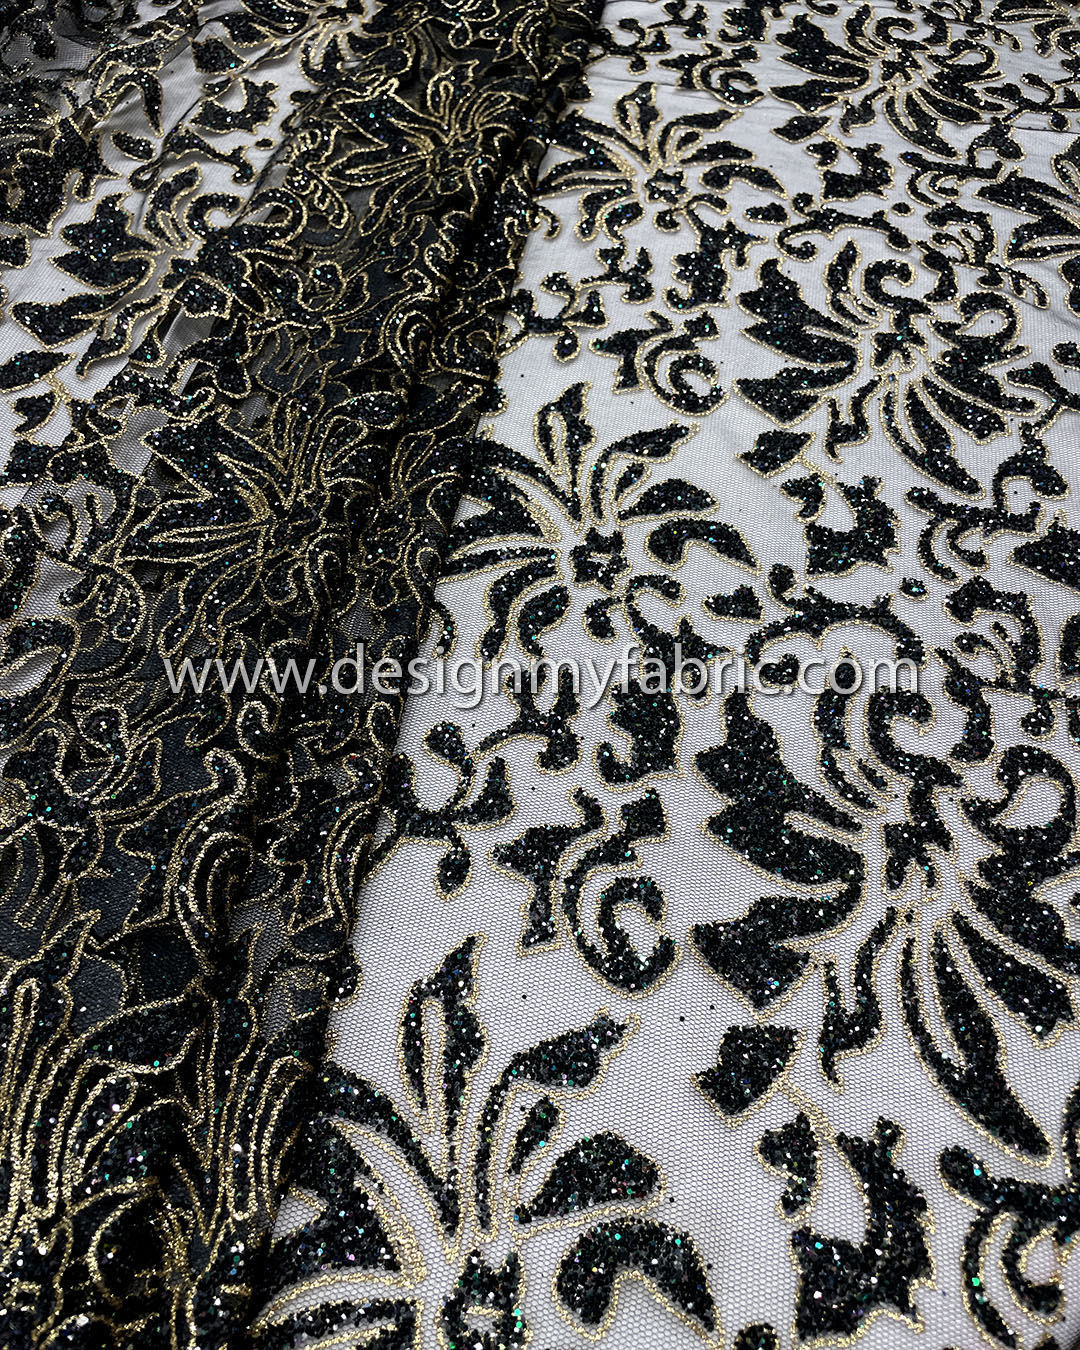 Gold and black glitter flower net fabric #20628 - Design My Fabric